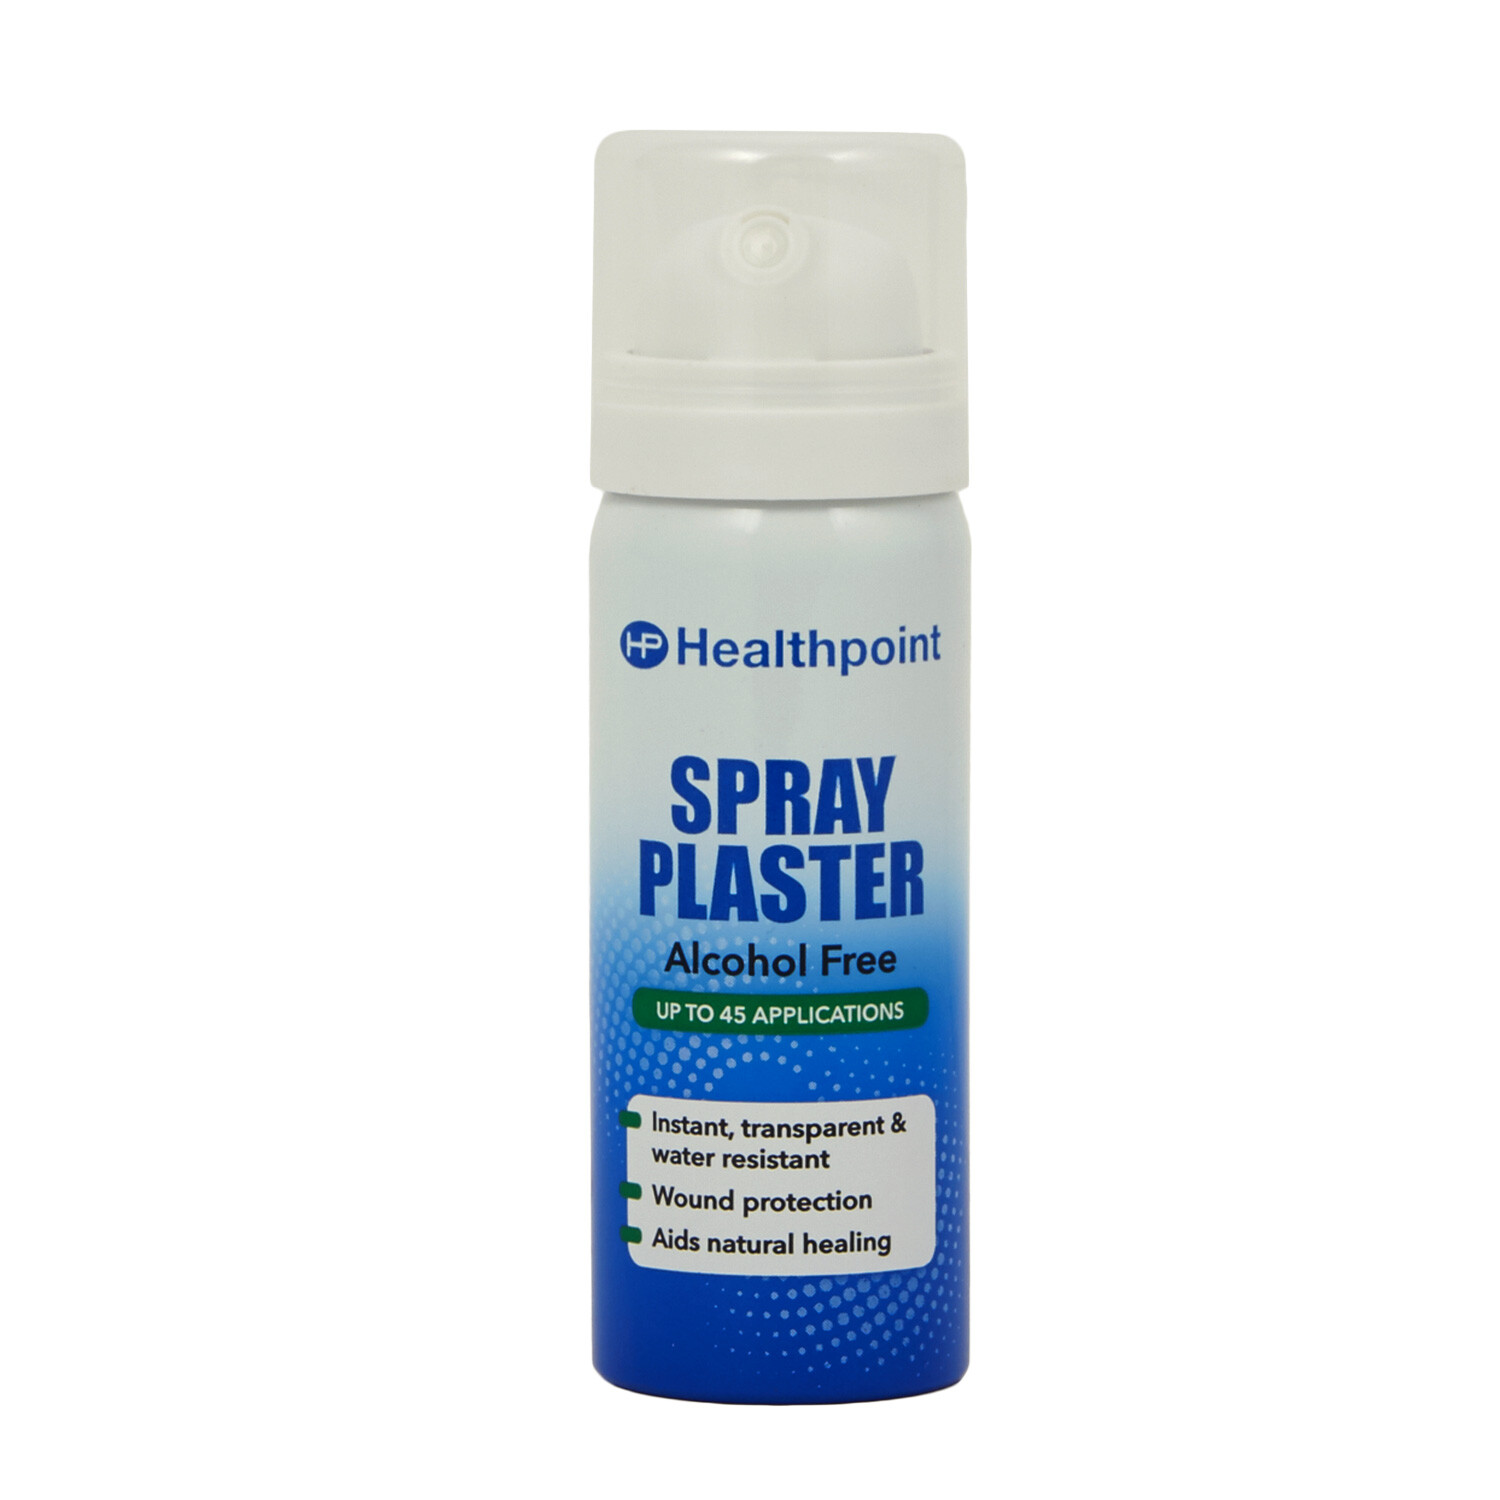 Healthpoint Spray Plaster 40ml - White Image 1